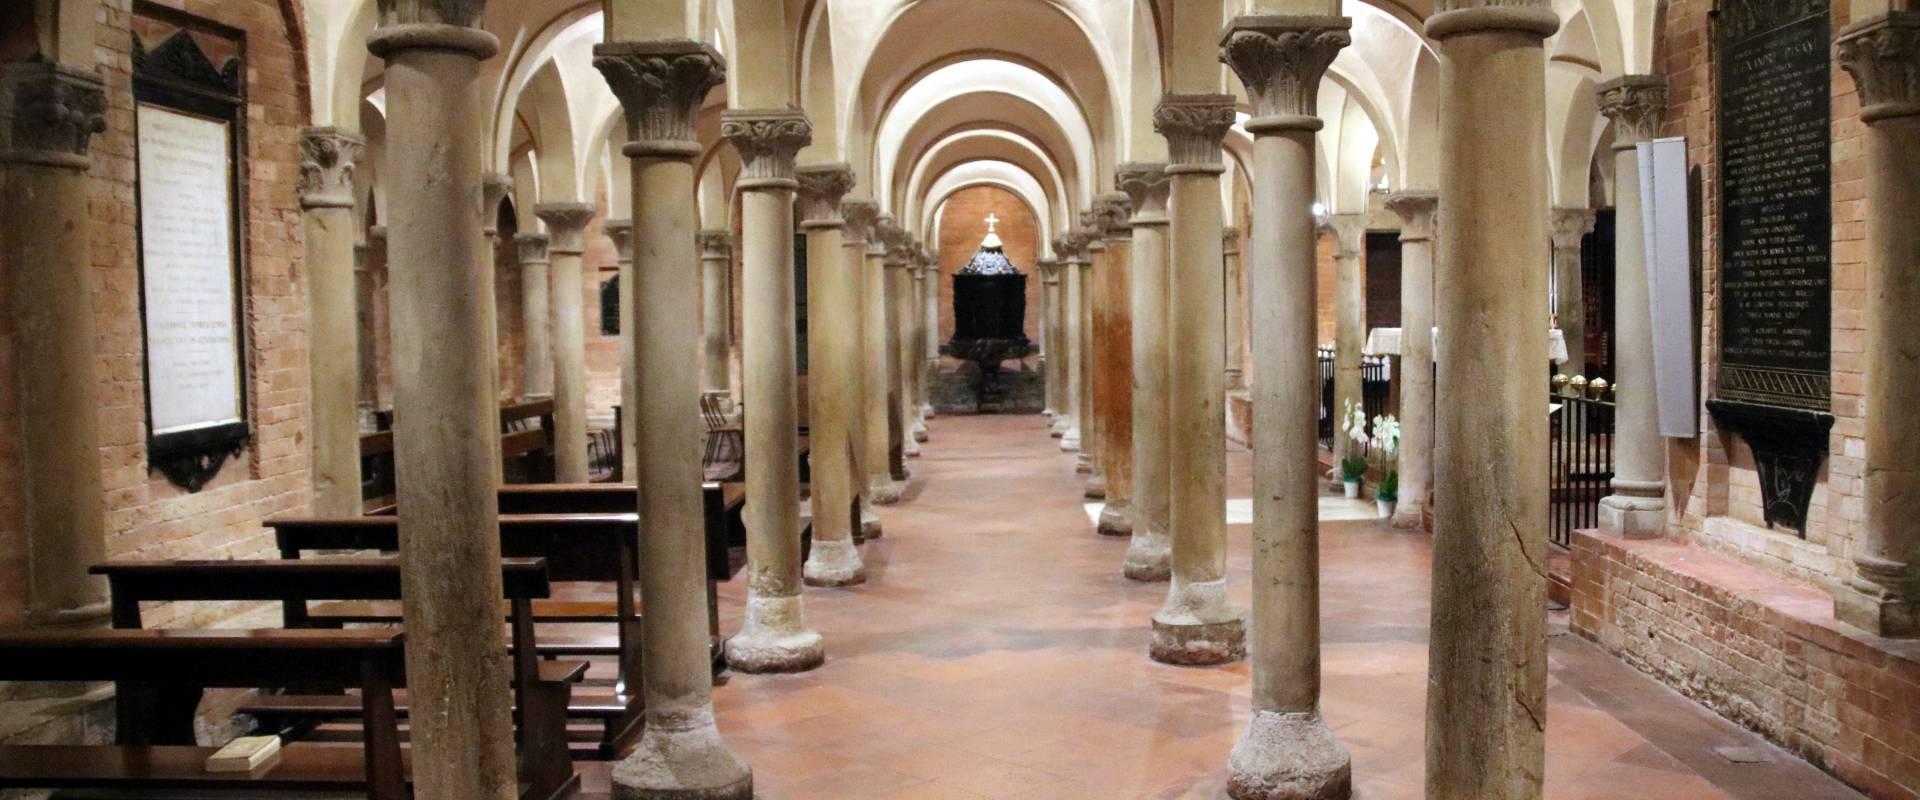 Duomo di Piacenza, cripta 01 foto di Mongolo1984